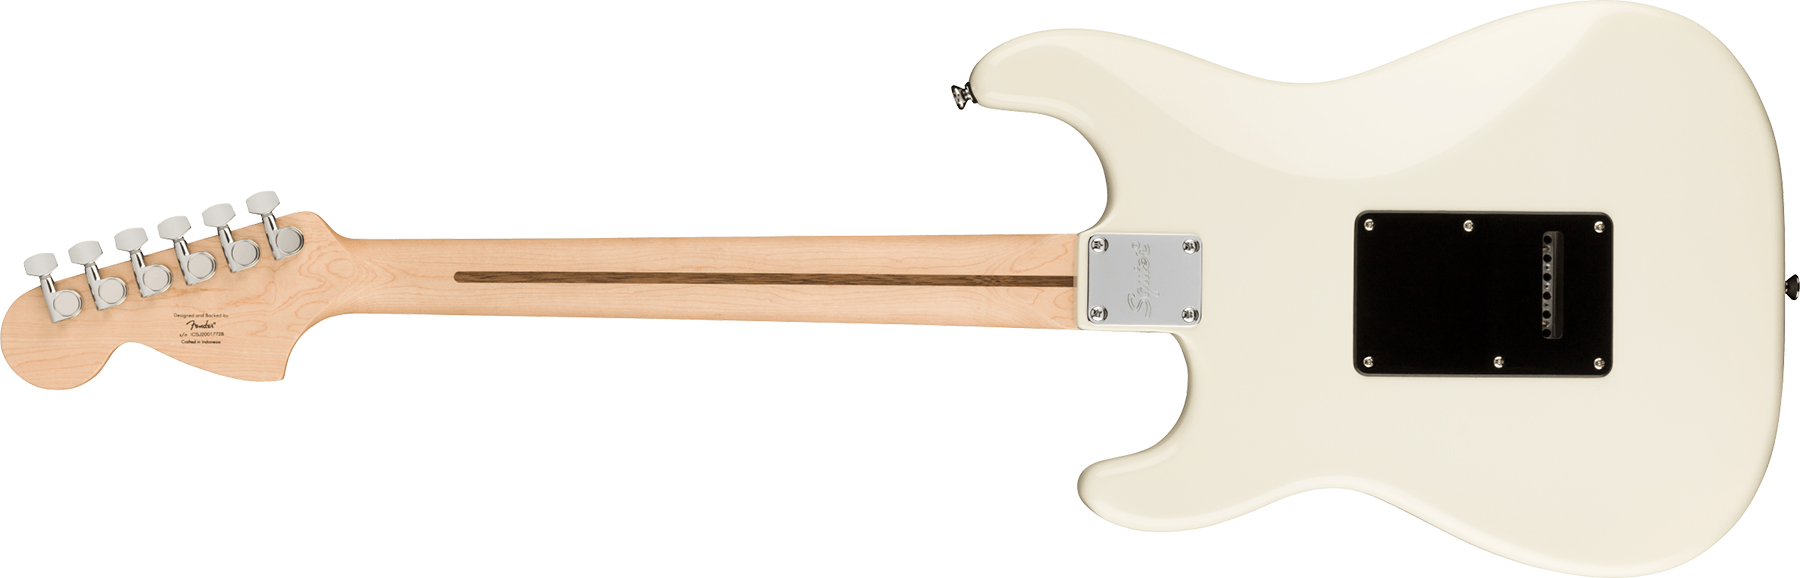 Squier Strat Affinity 2021 Hh Trem Lau - Olympic White - Str shape electric guitar - Variation 1